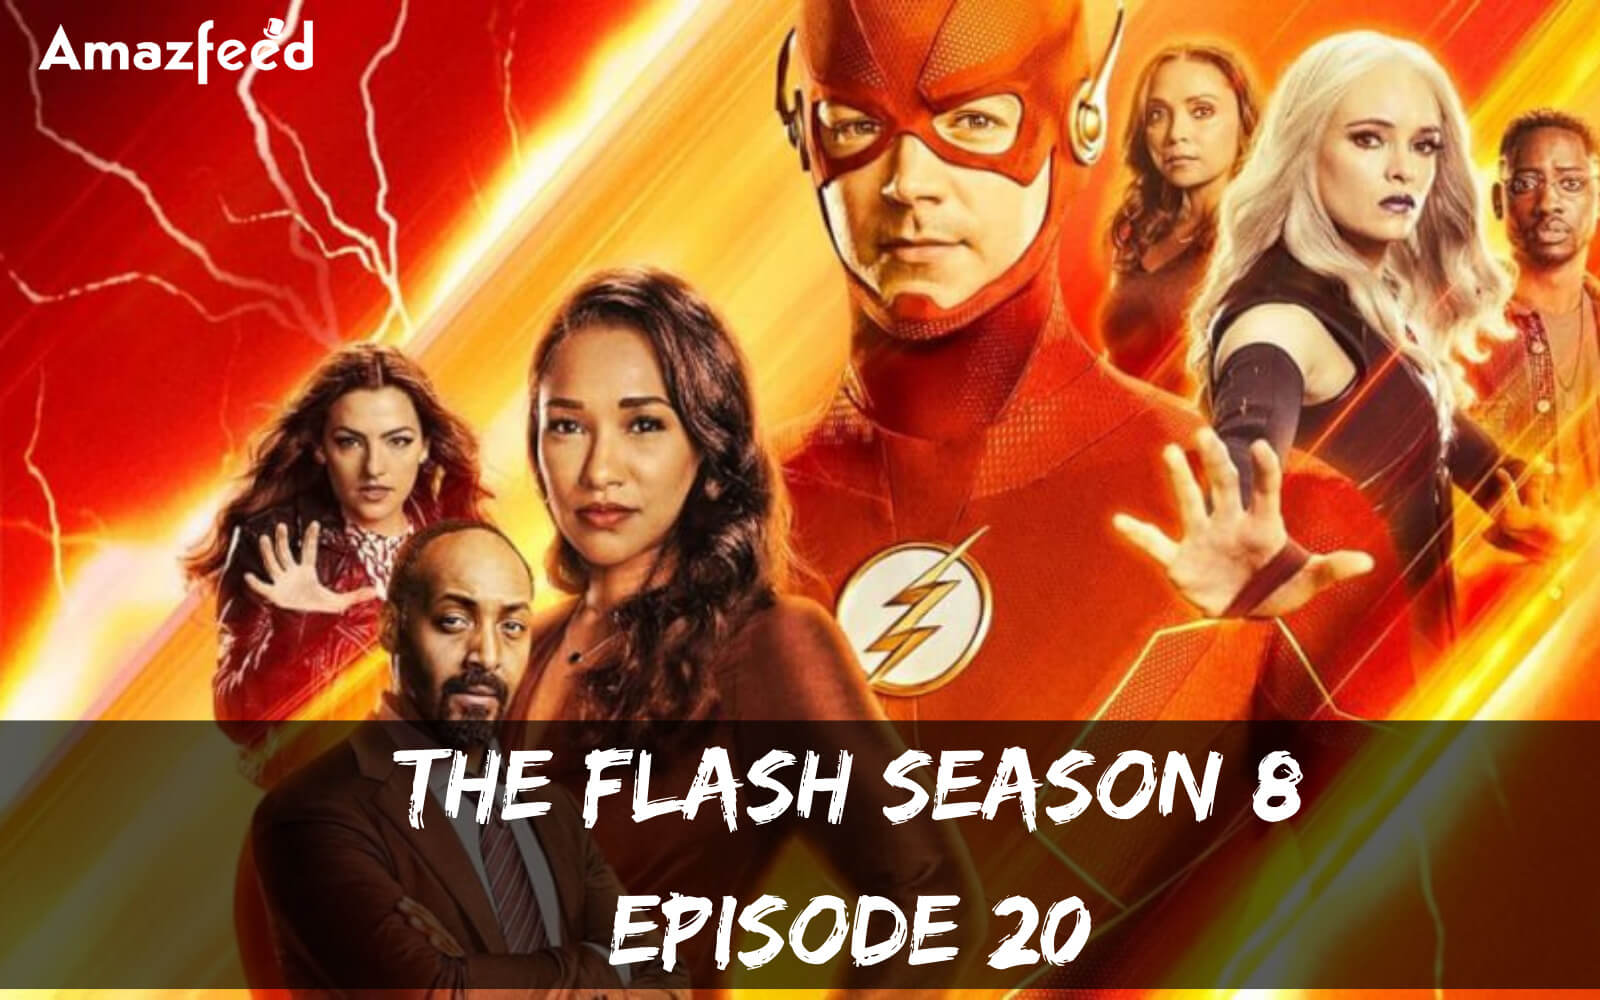 The Flash season 8 episode 20 release date